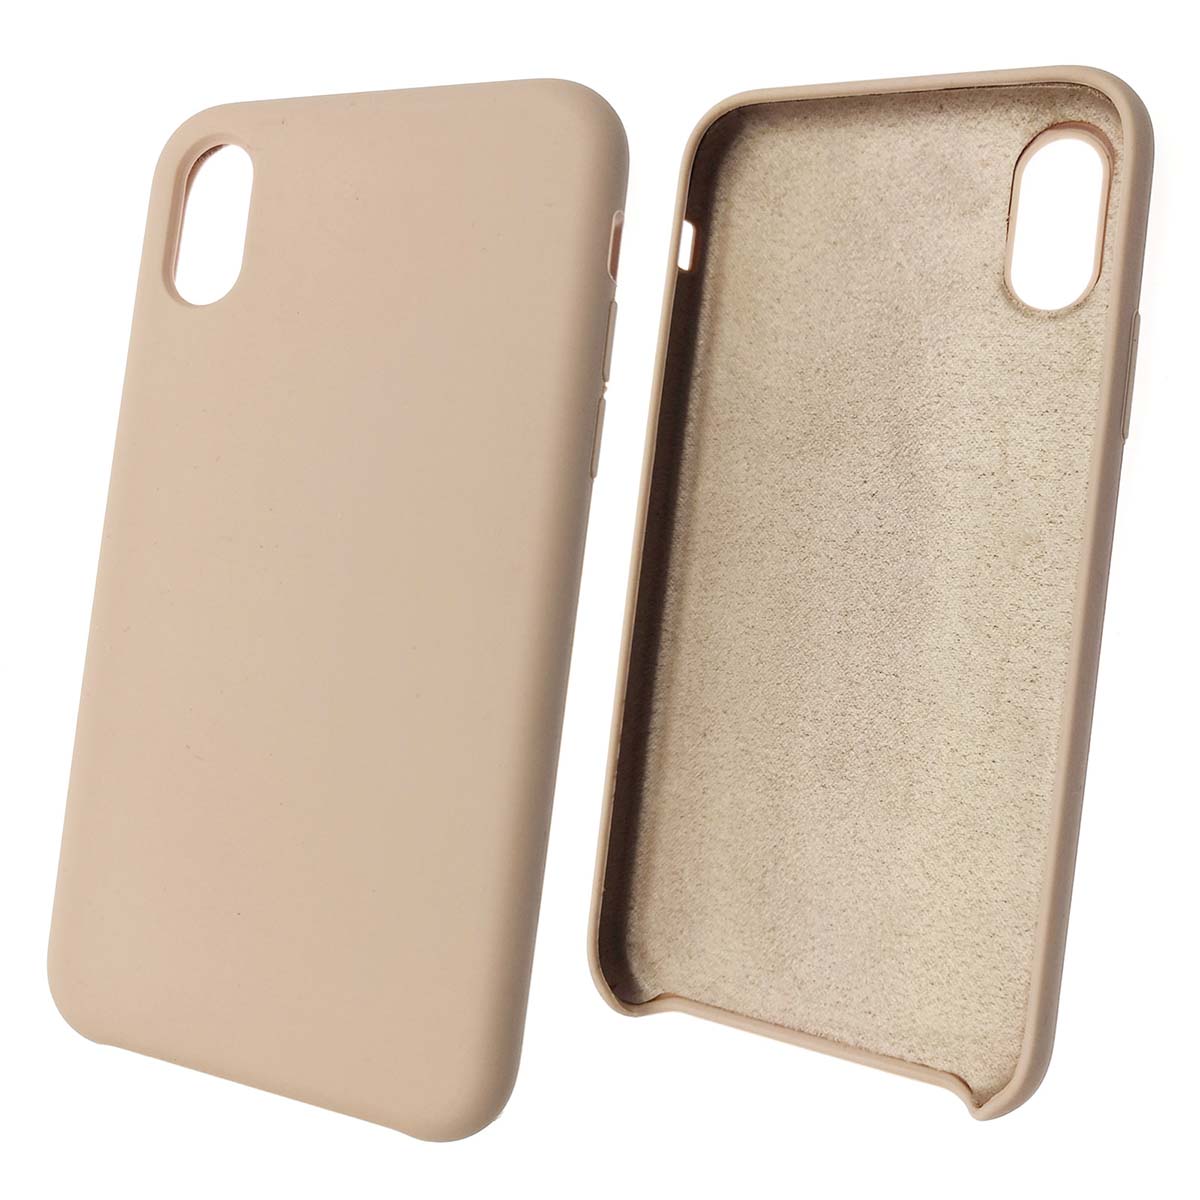 Чехол накладка Silicon Case для APPLE iPhone X, iPhone XS, силикон, бархат, цвет розовый песок.